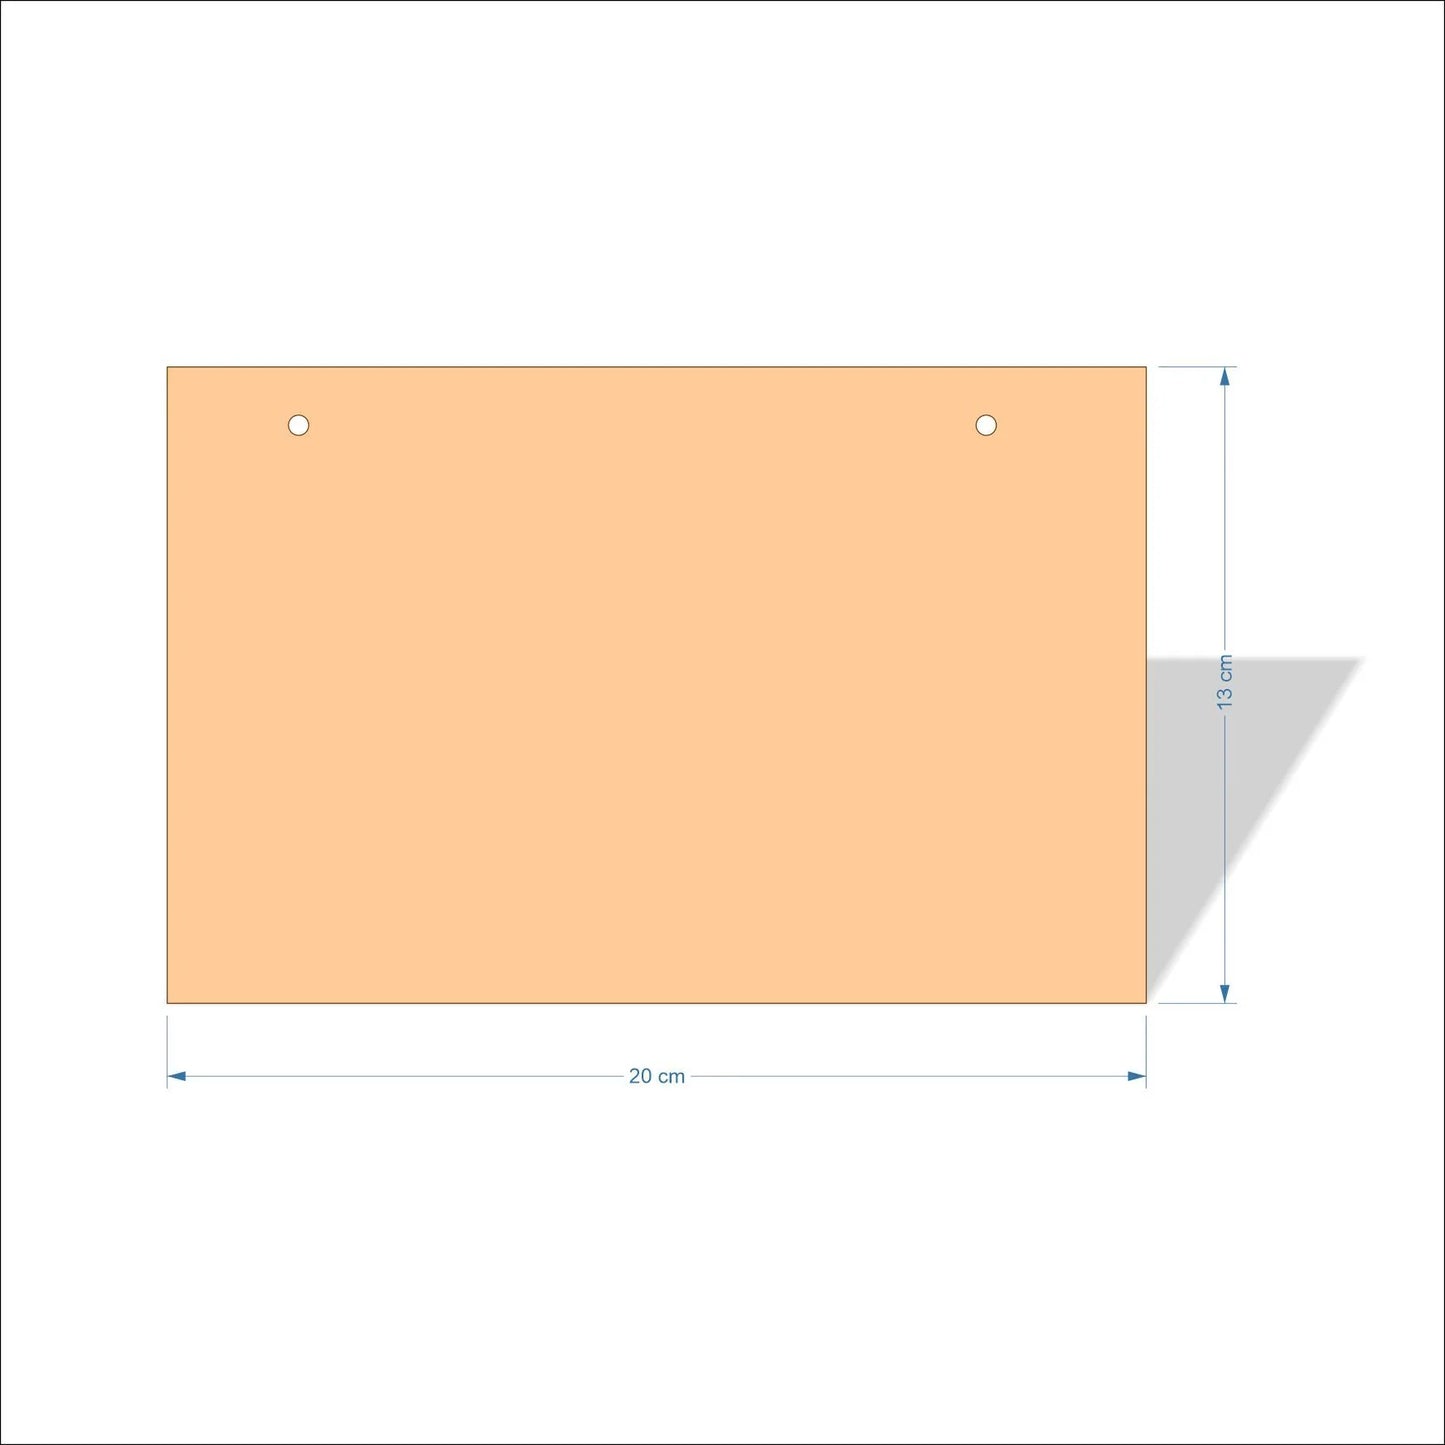 20 cm X 13 cm 4mm poplar plywood Plaques with square corners